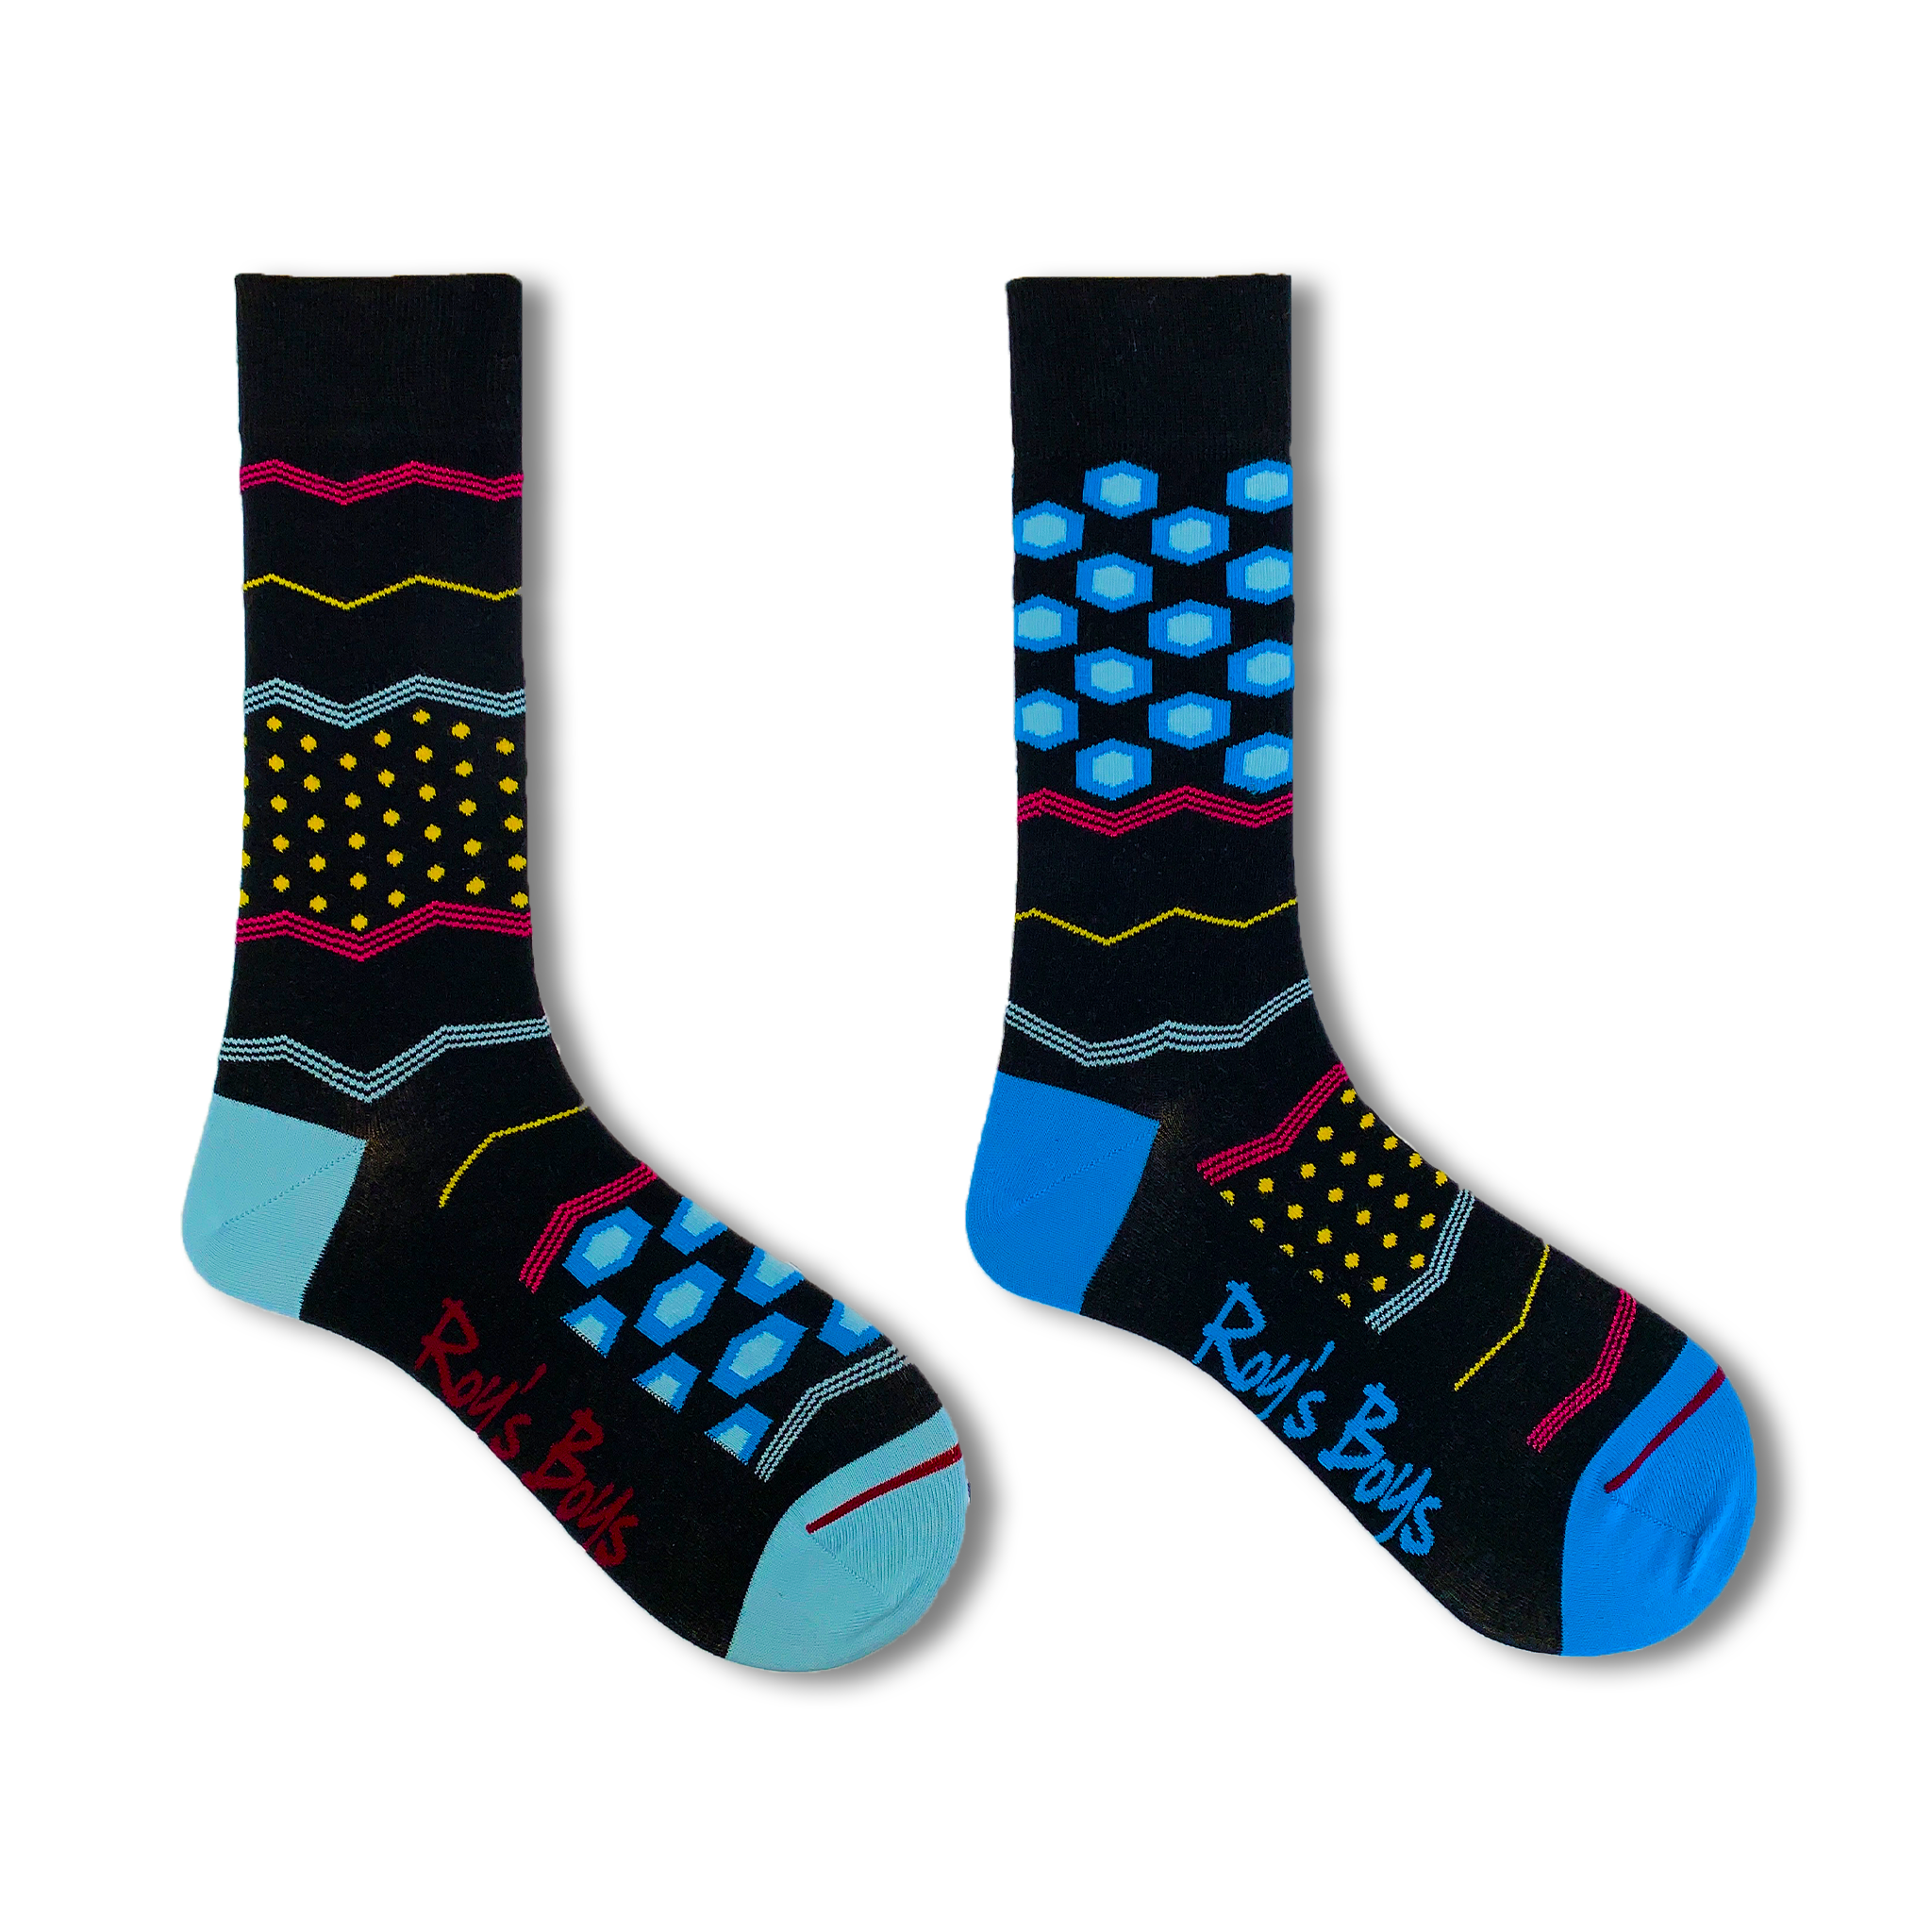 Apulia Premium Odd Socks